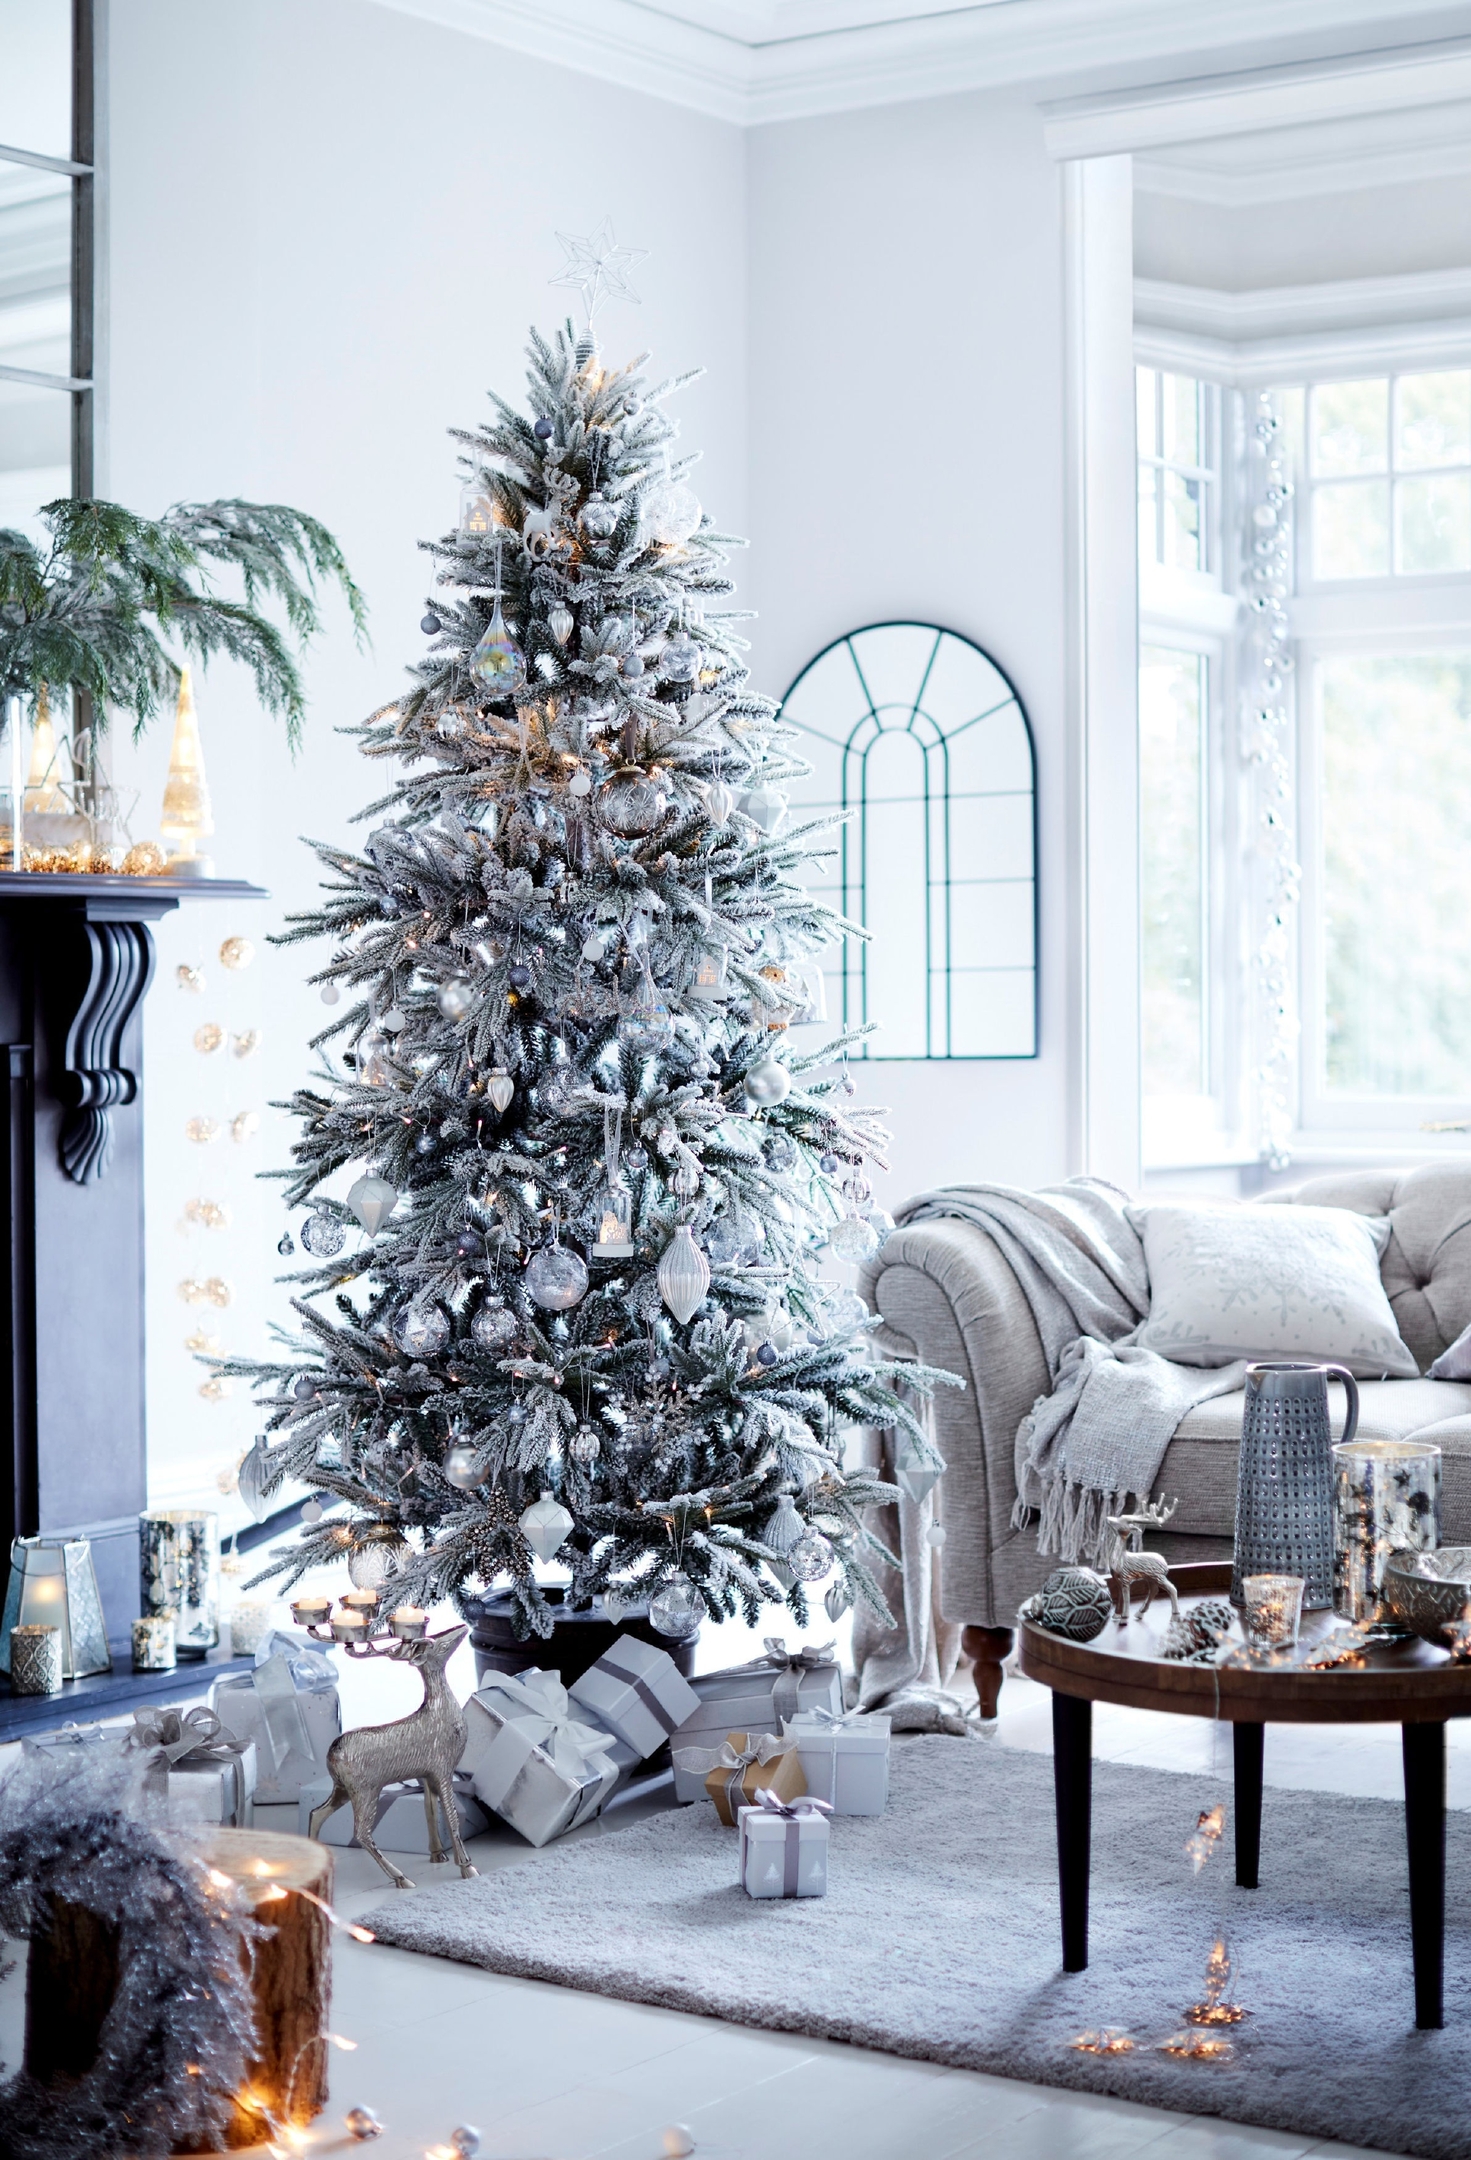 Interiors INTERIORS Christmas Trees 082462 24027175 